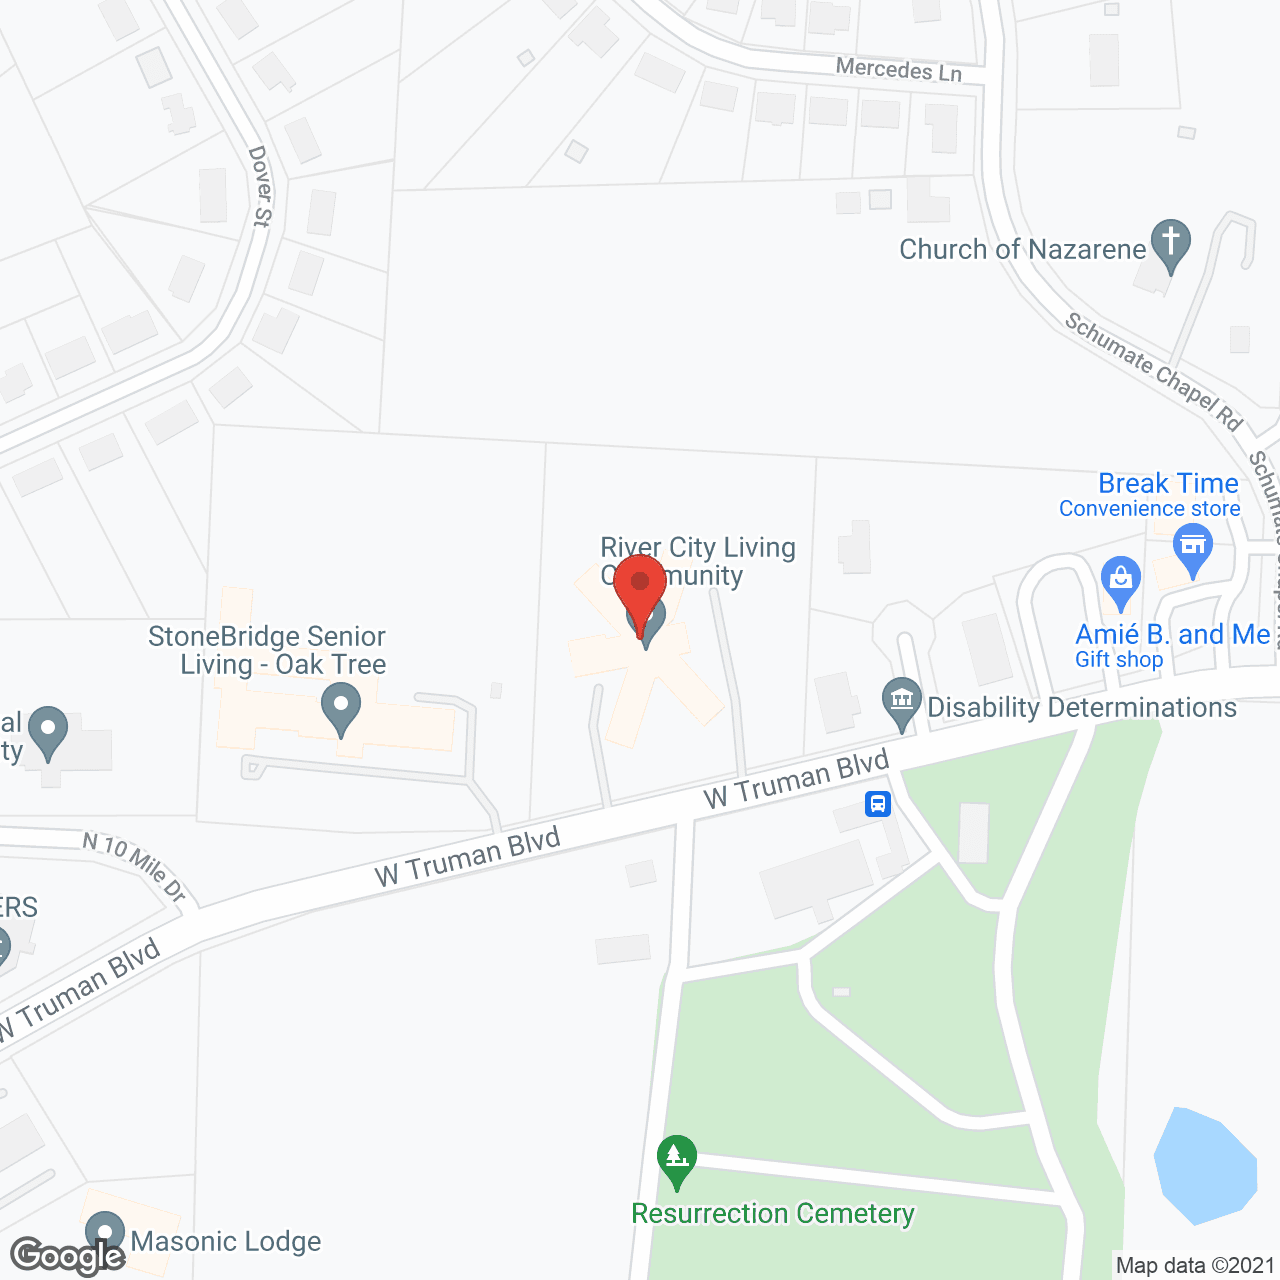 Golden LivingCenter - Jefferson City in google map